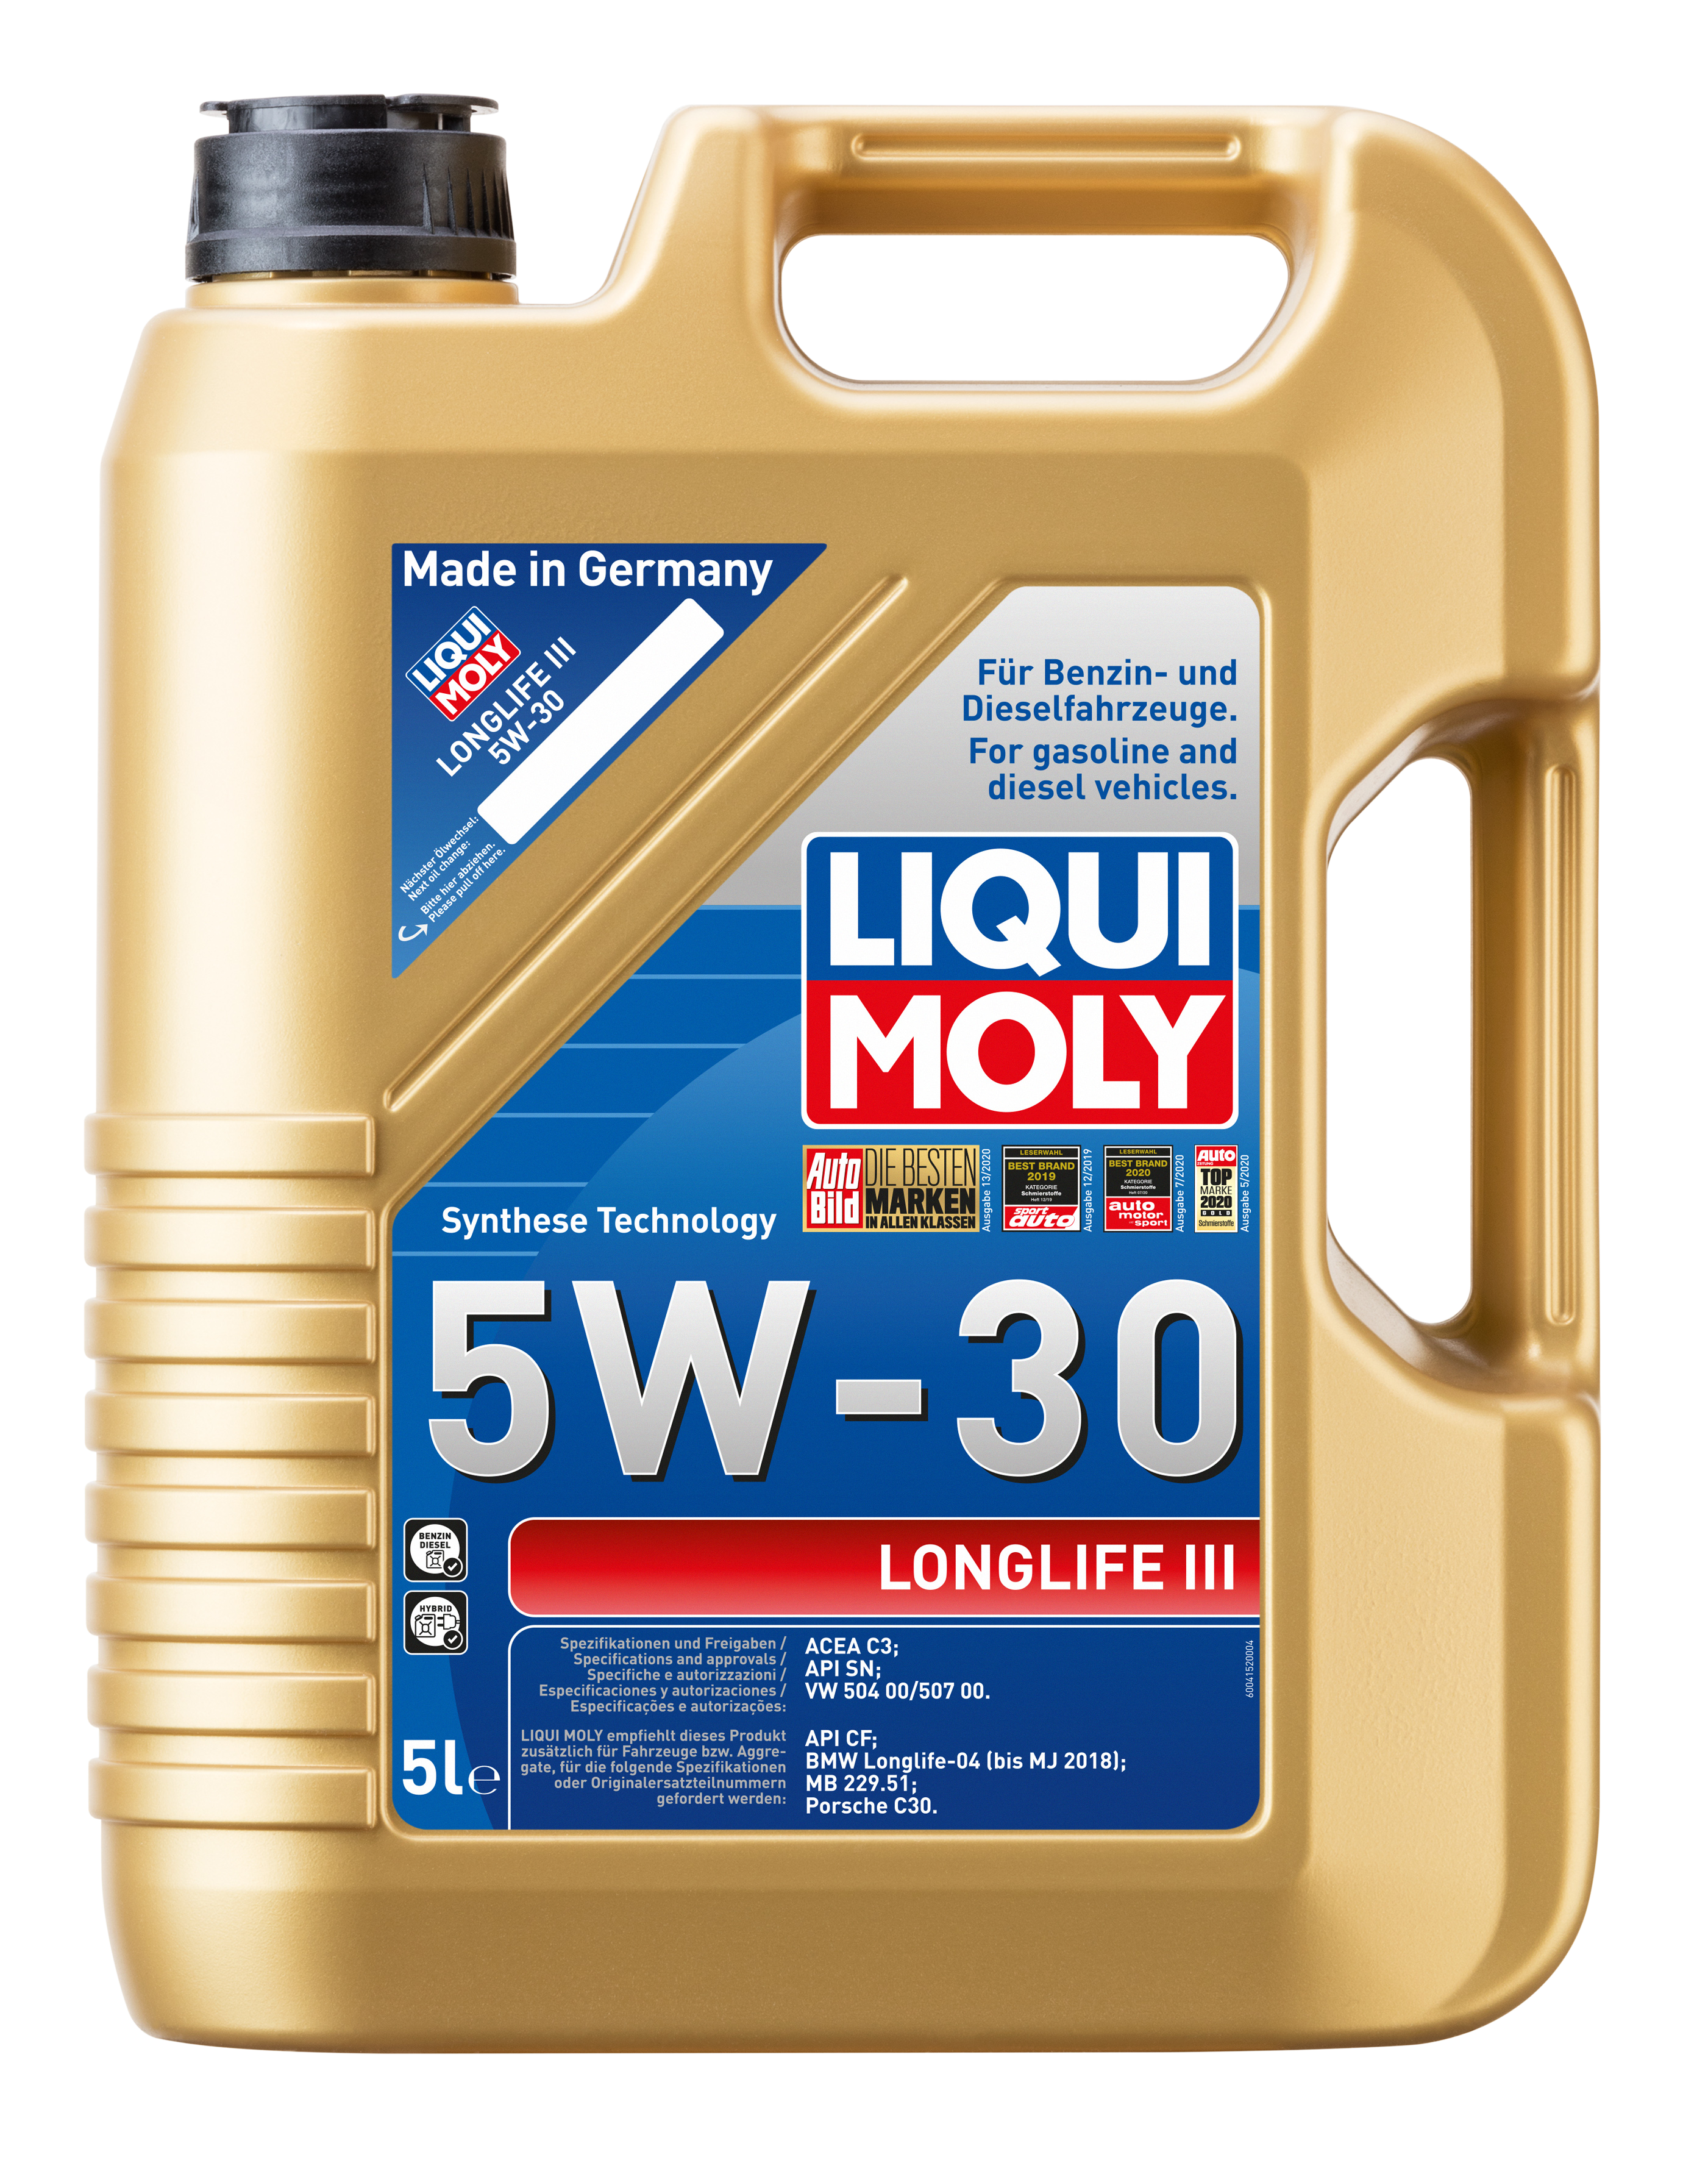 5W-30 Liqui Moly 20822 Longlife III Motoröl 5 Liter